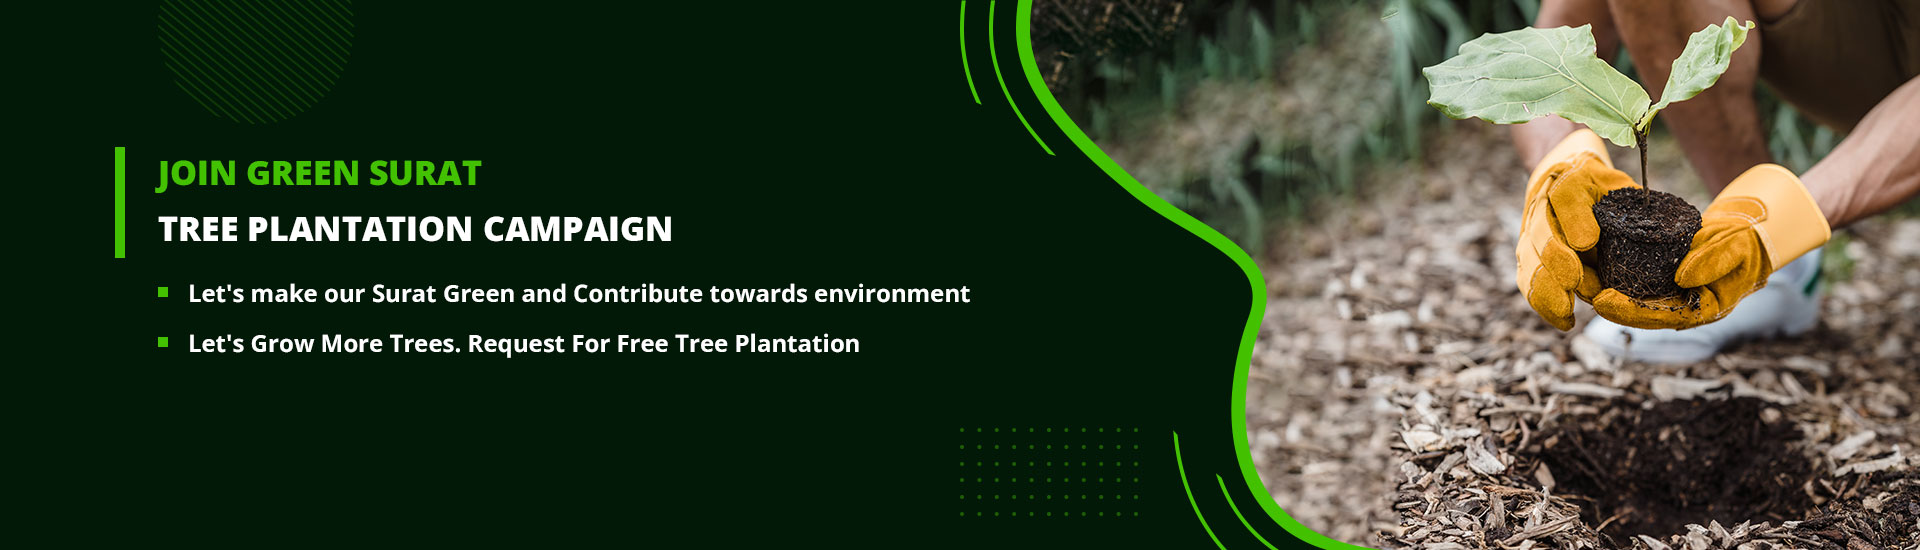 TREE PLANTATION/CONTRIBUTION REQUEST